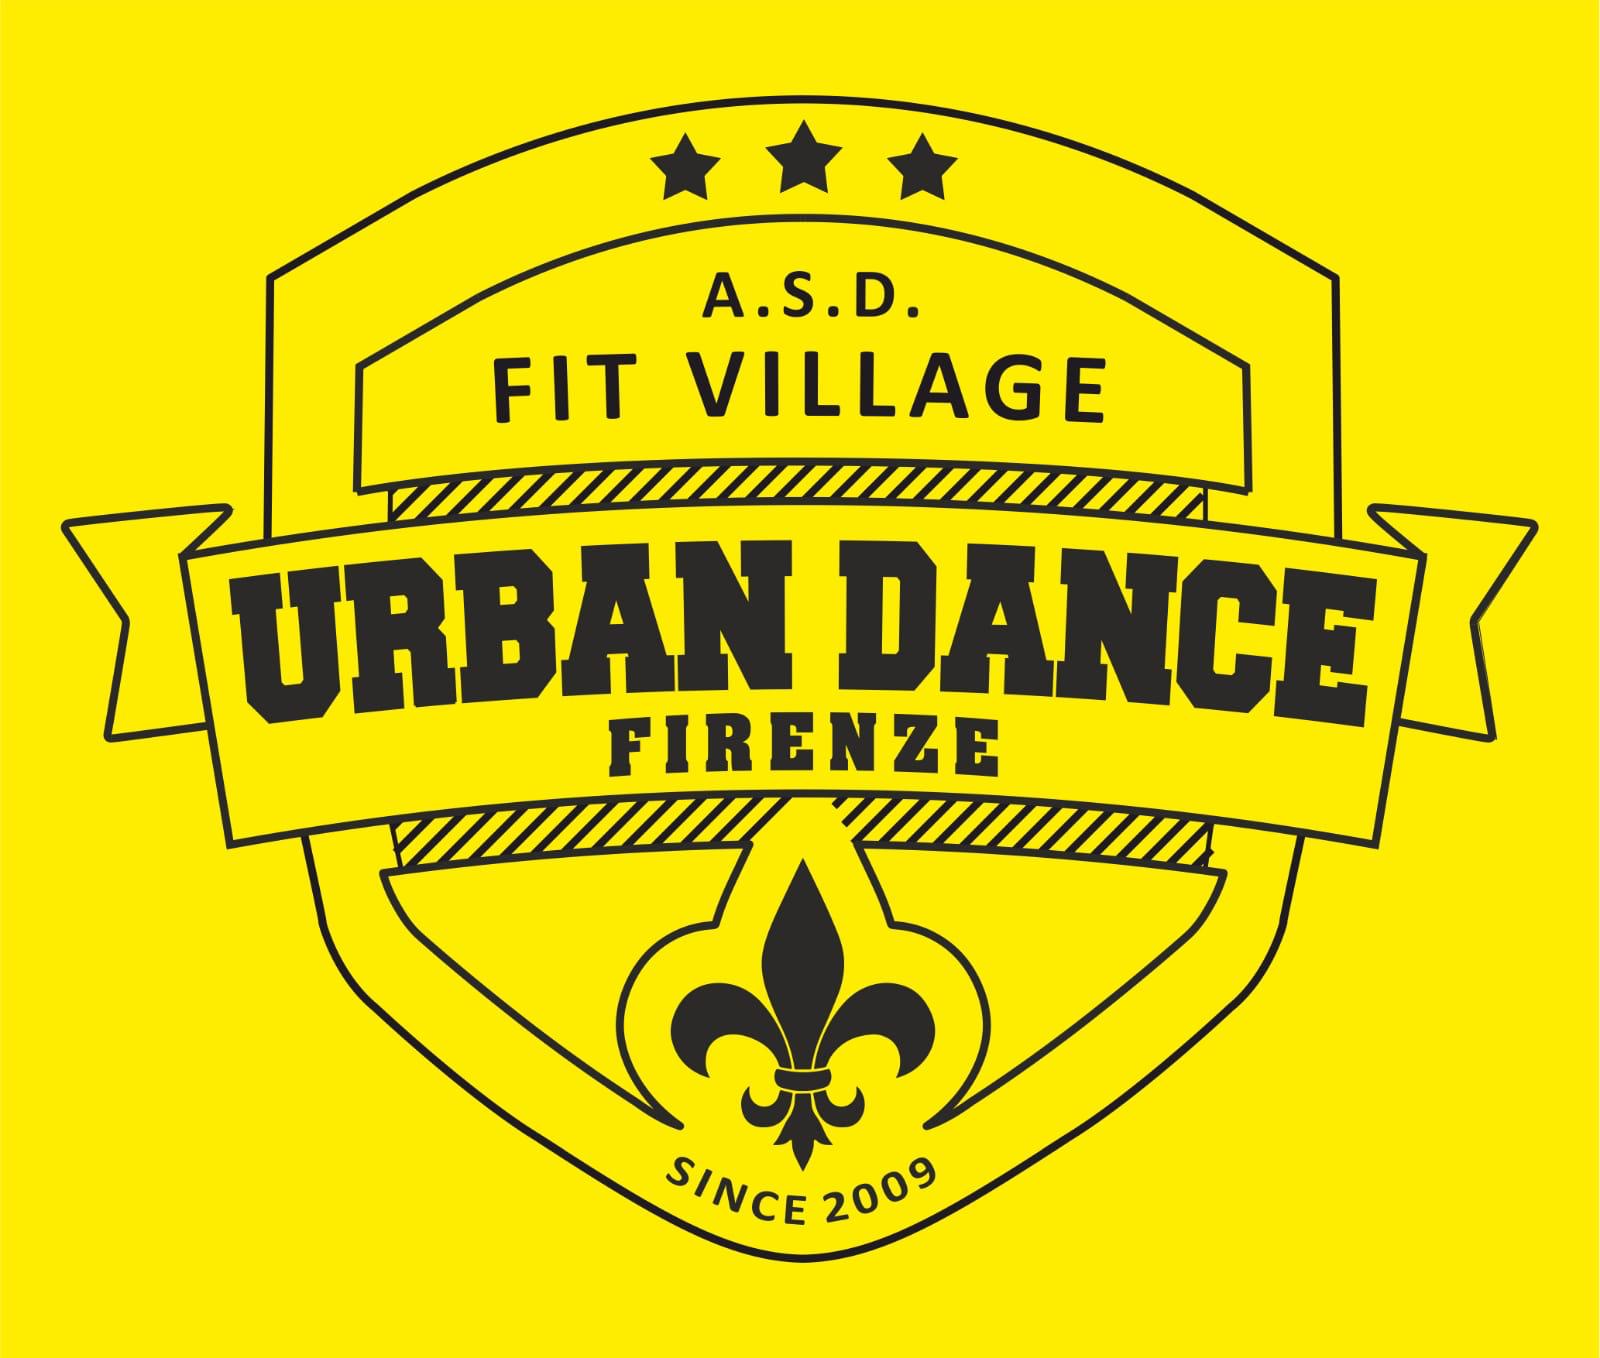 ASD FitVillage Urban Dance Firenze